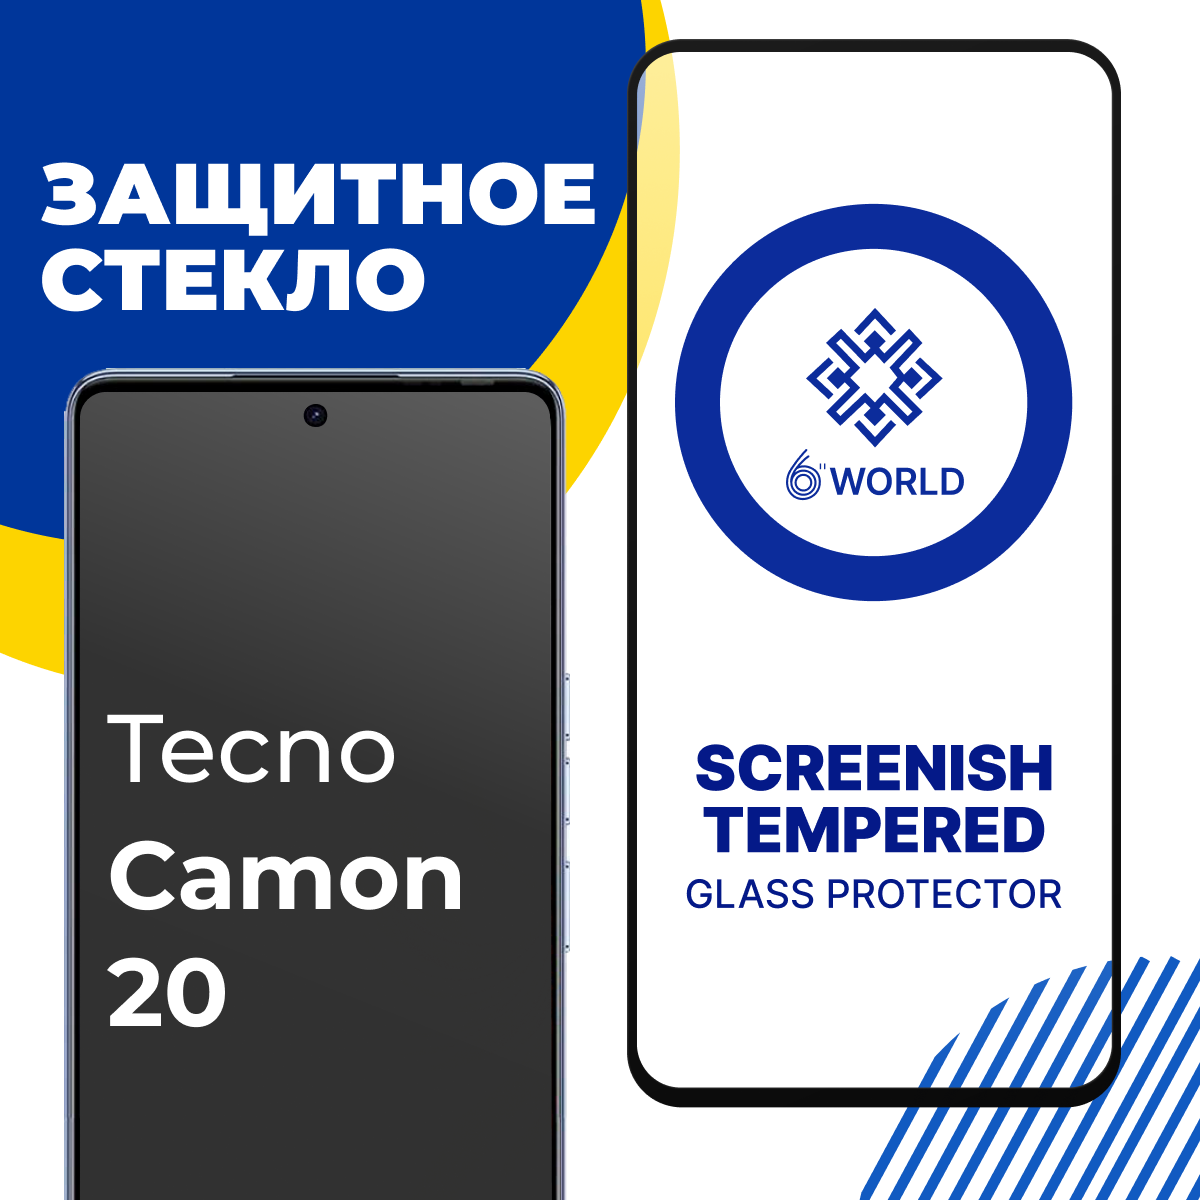 Глянцевое защитное стекло для телефона Tecno Camon 20 / Противоударное закаленное стекло на смартфон Текно Камон 20 / SCREENISH GLASS